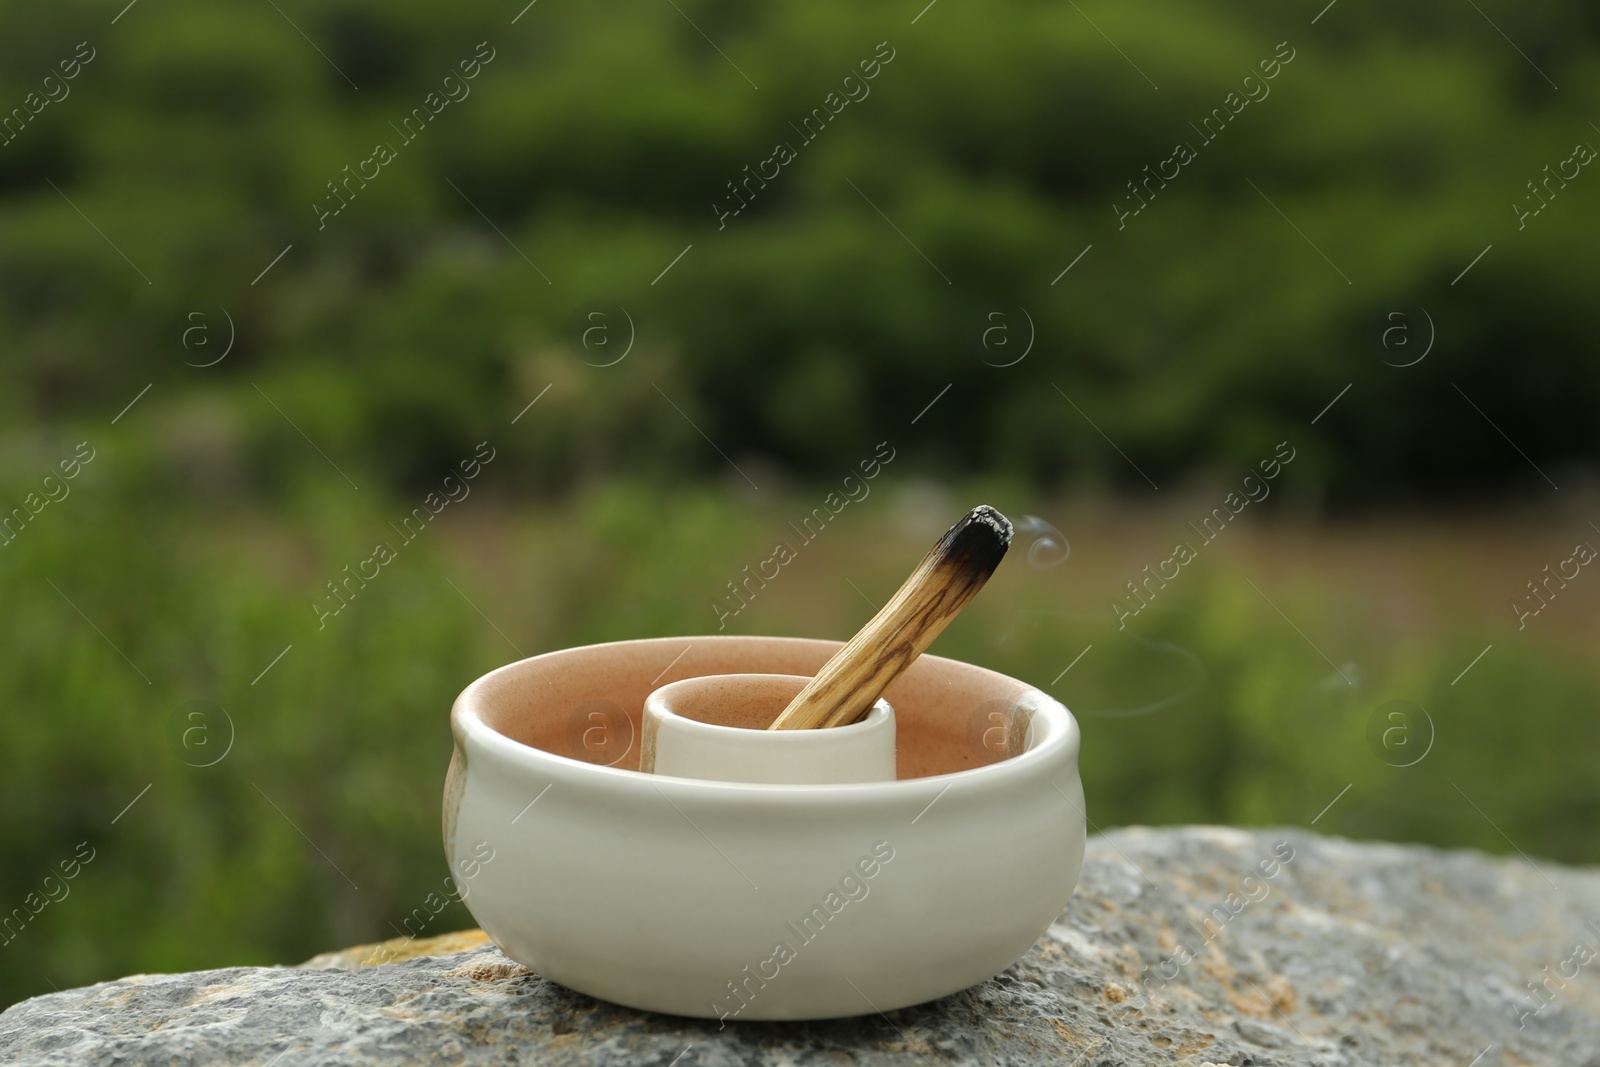 Photo of Burnt palo santo stick on stone surface outdoors, closeup